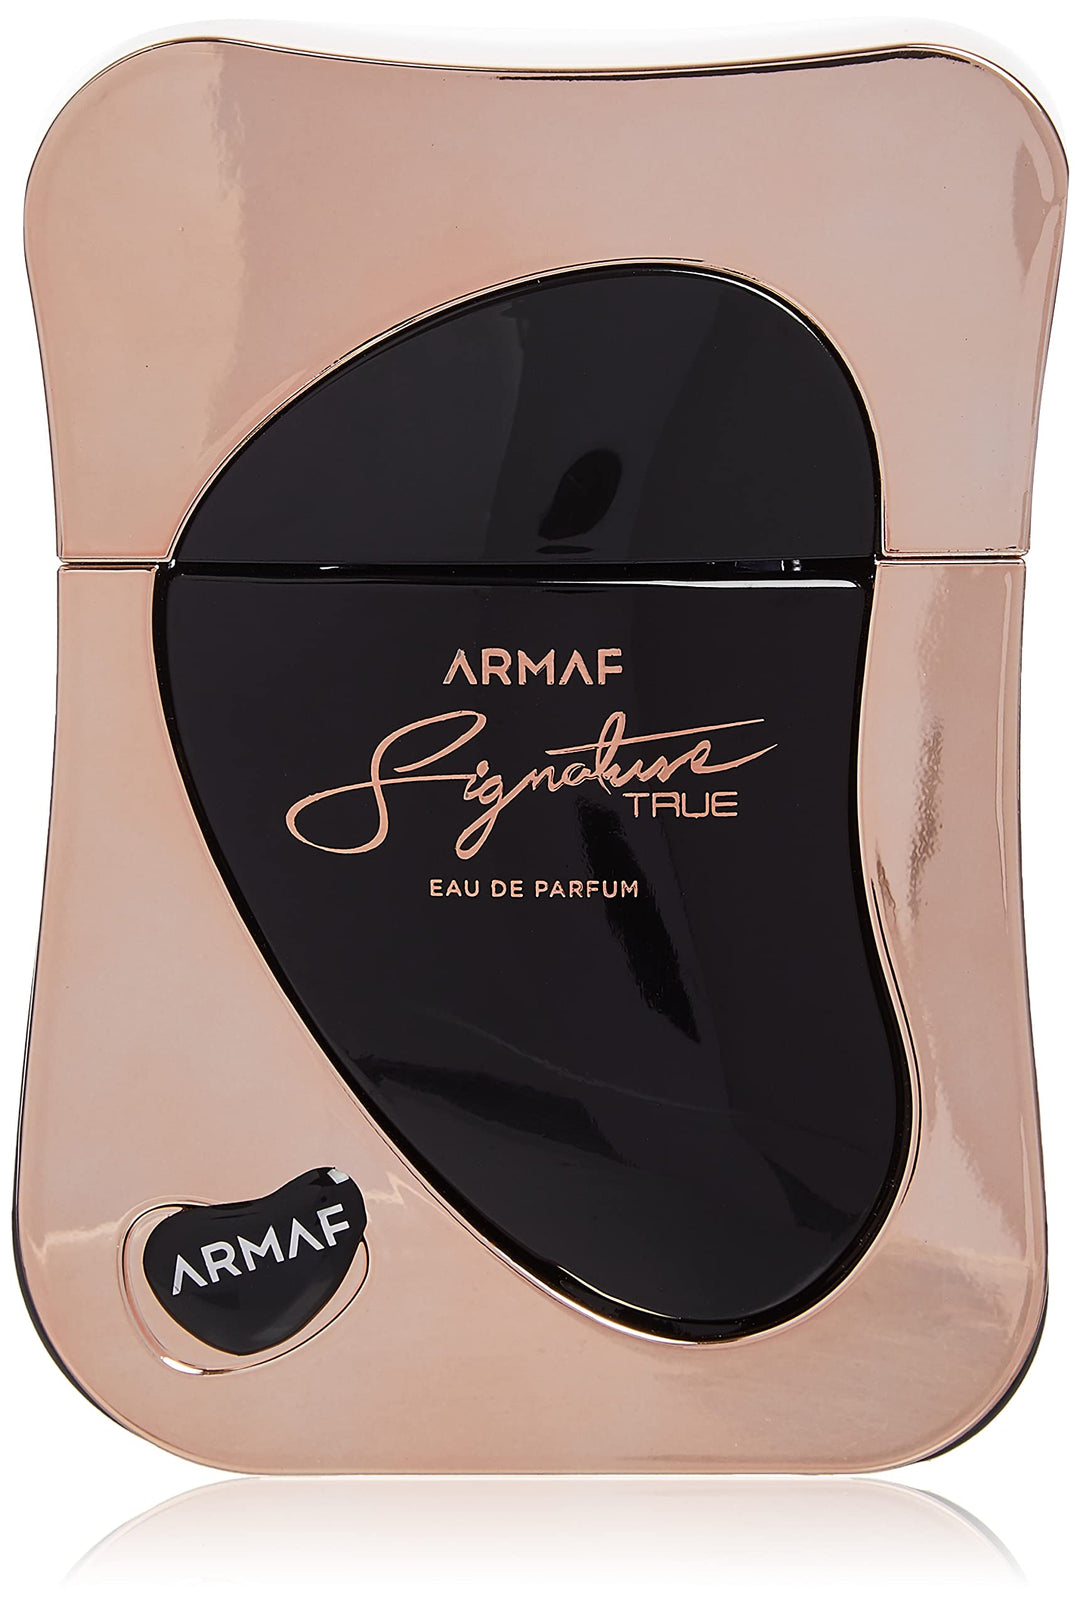 ARMAF Signature True Eau de Parfum (EDP) 100ml